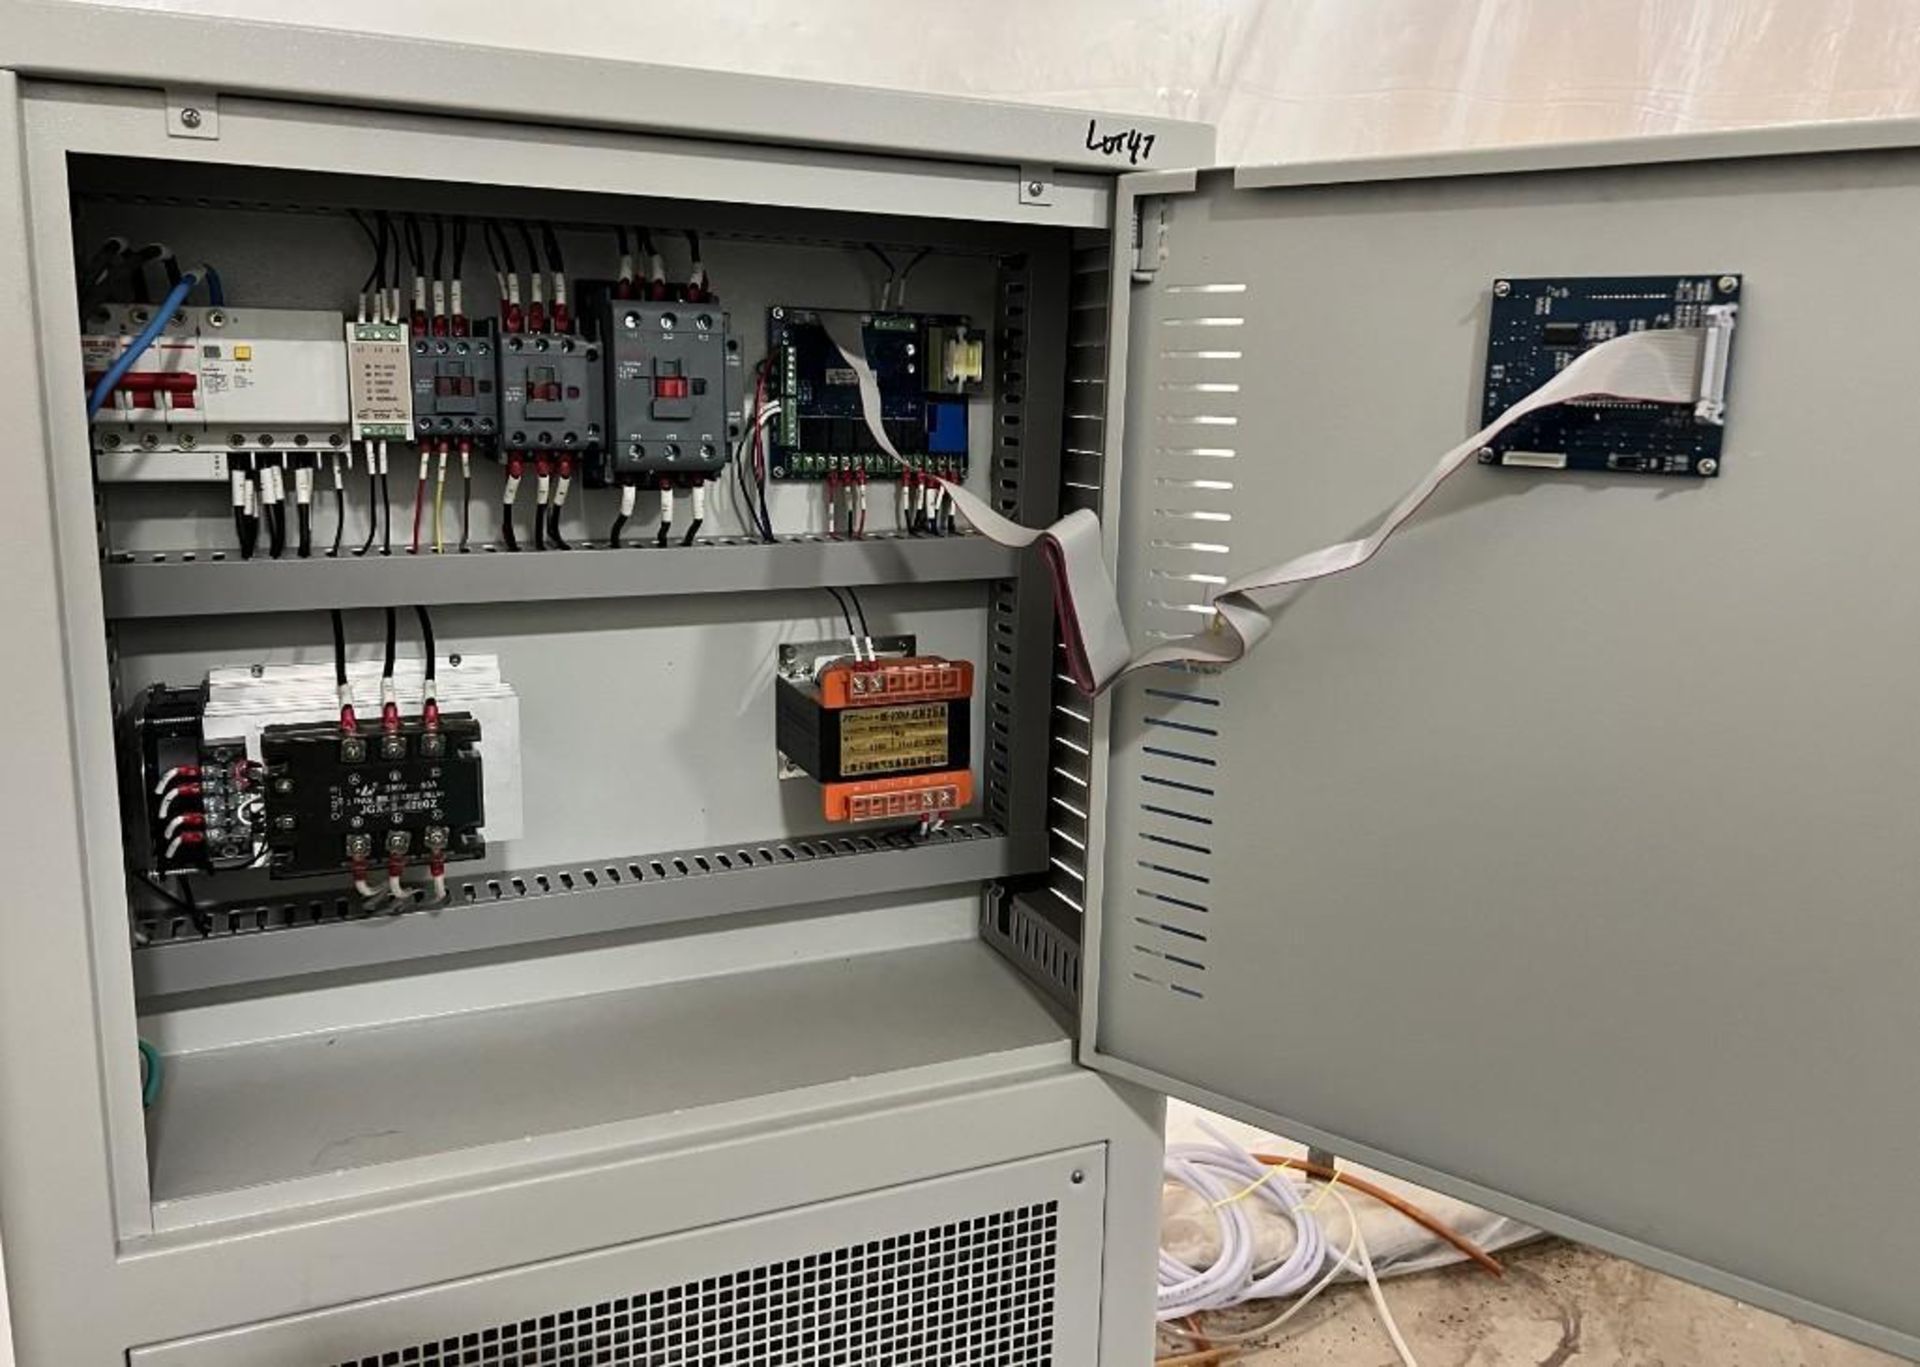 YHCHEM Heating & Cooling Circulator, Model YHR-100T, Built 06/2019. - Image 6 of 7